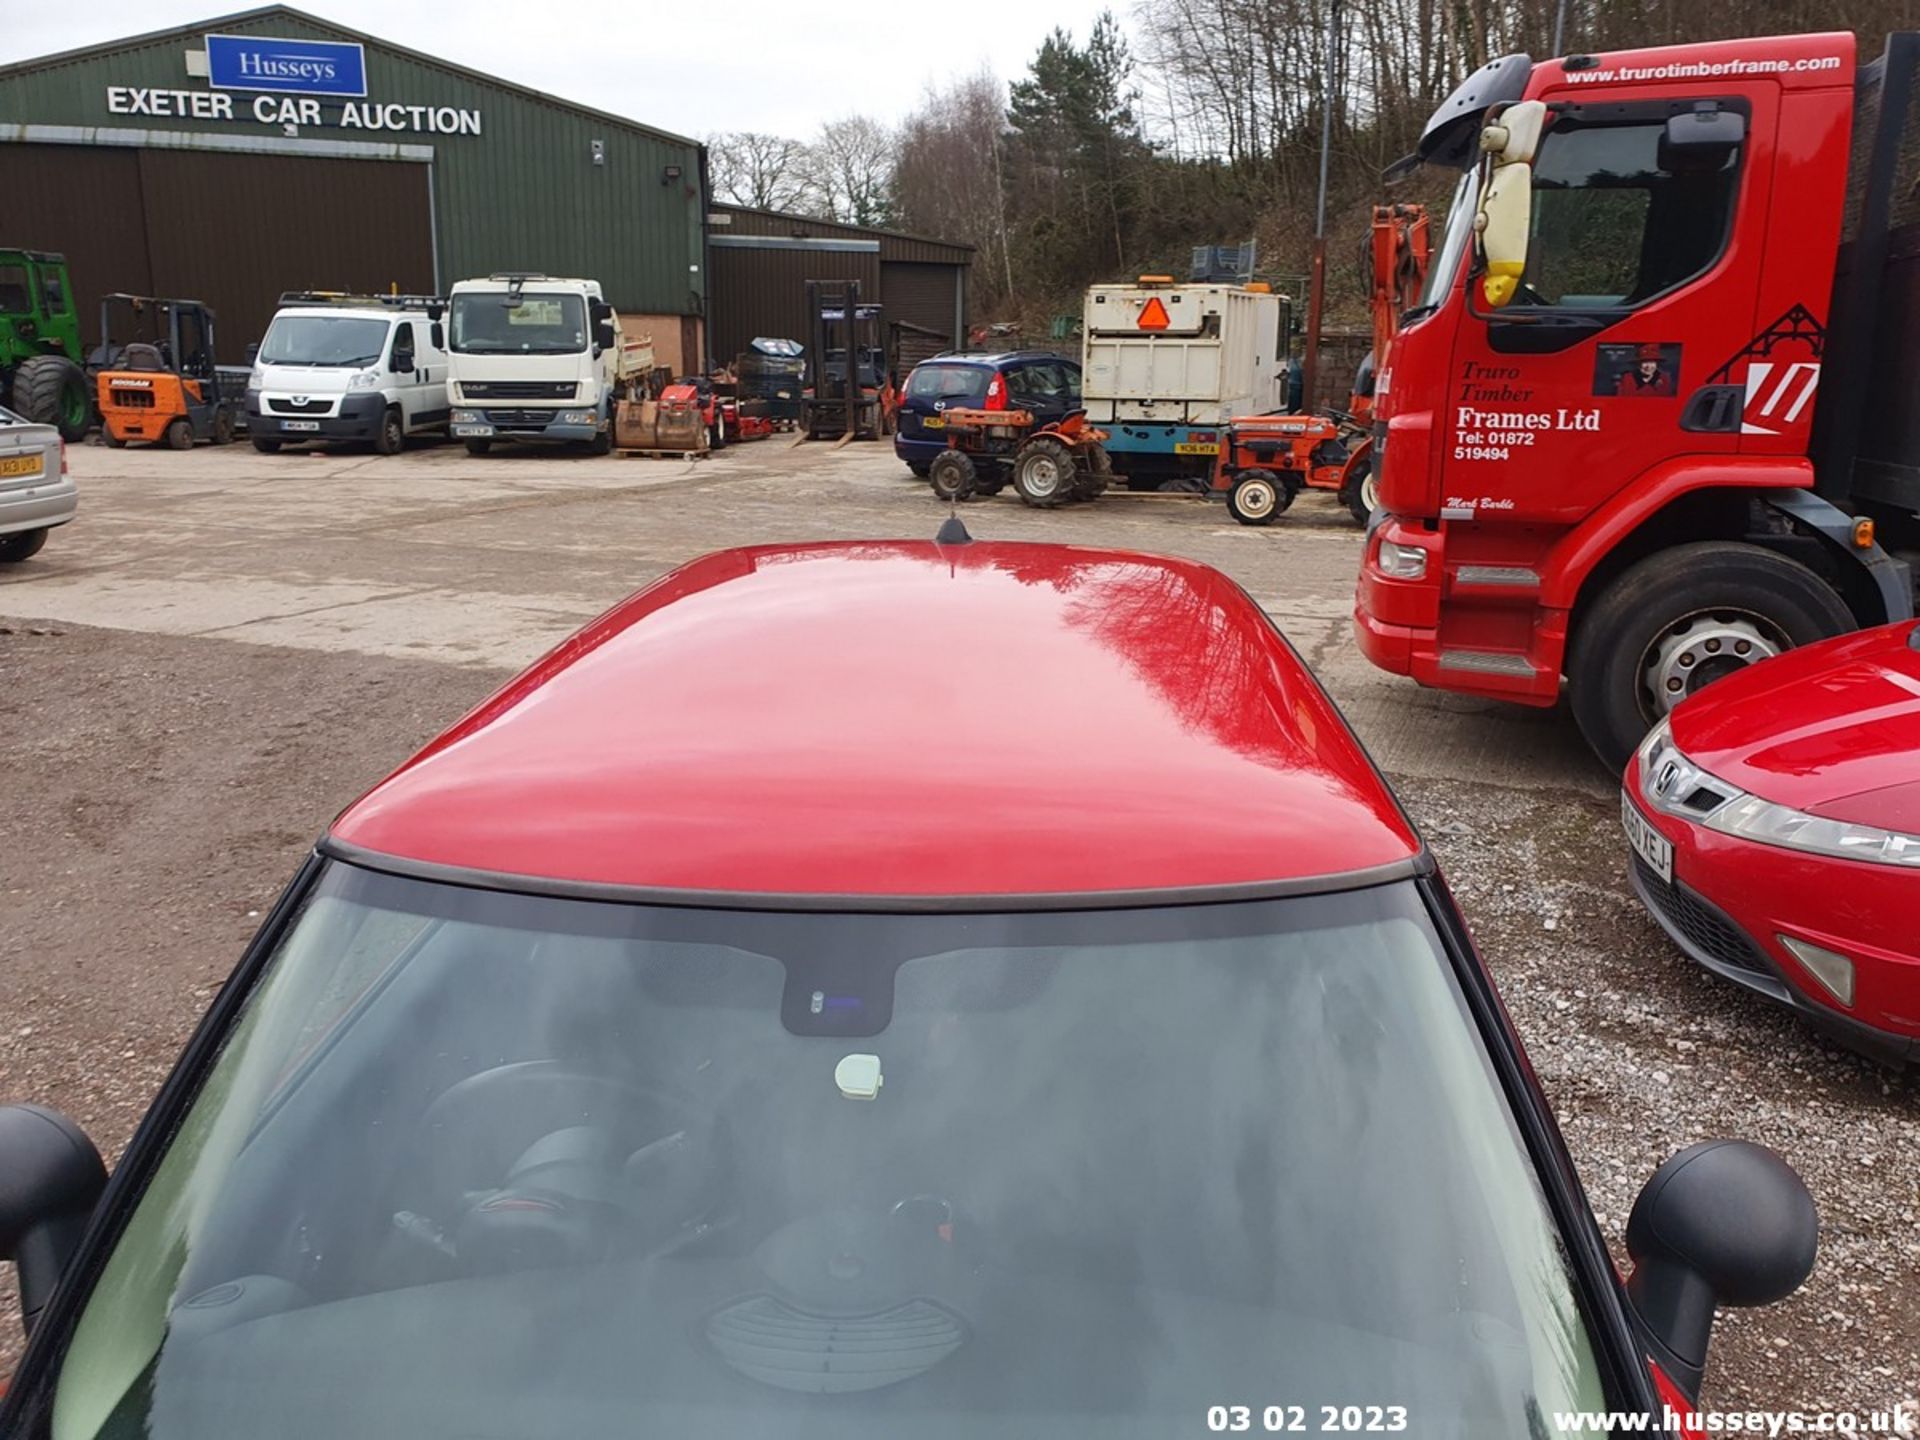 13/13 MINI ONE D - 1598cc 3dr Hatchback (Red) - Image 45 of 45